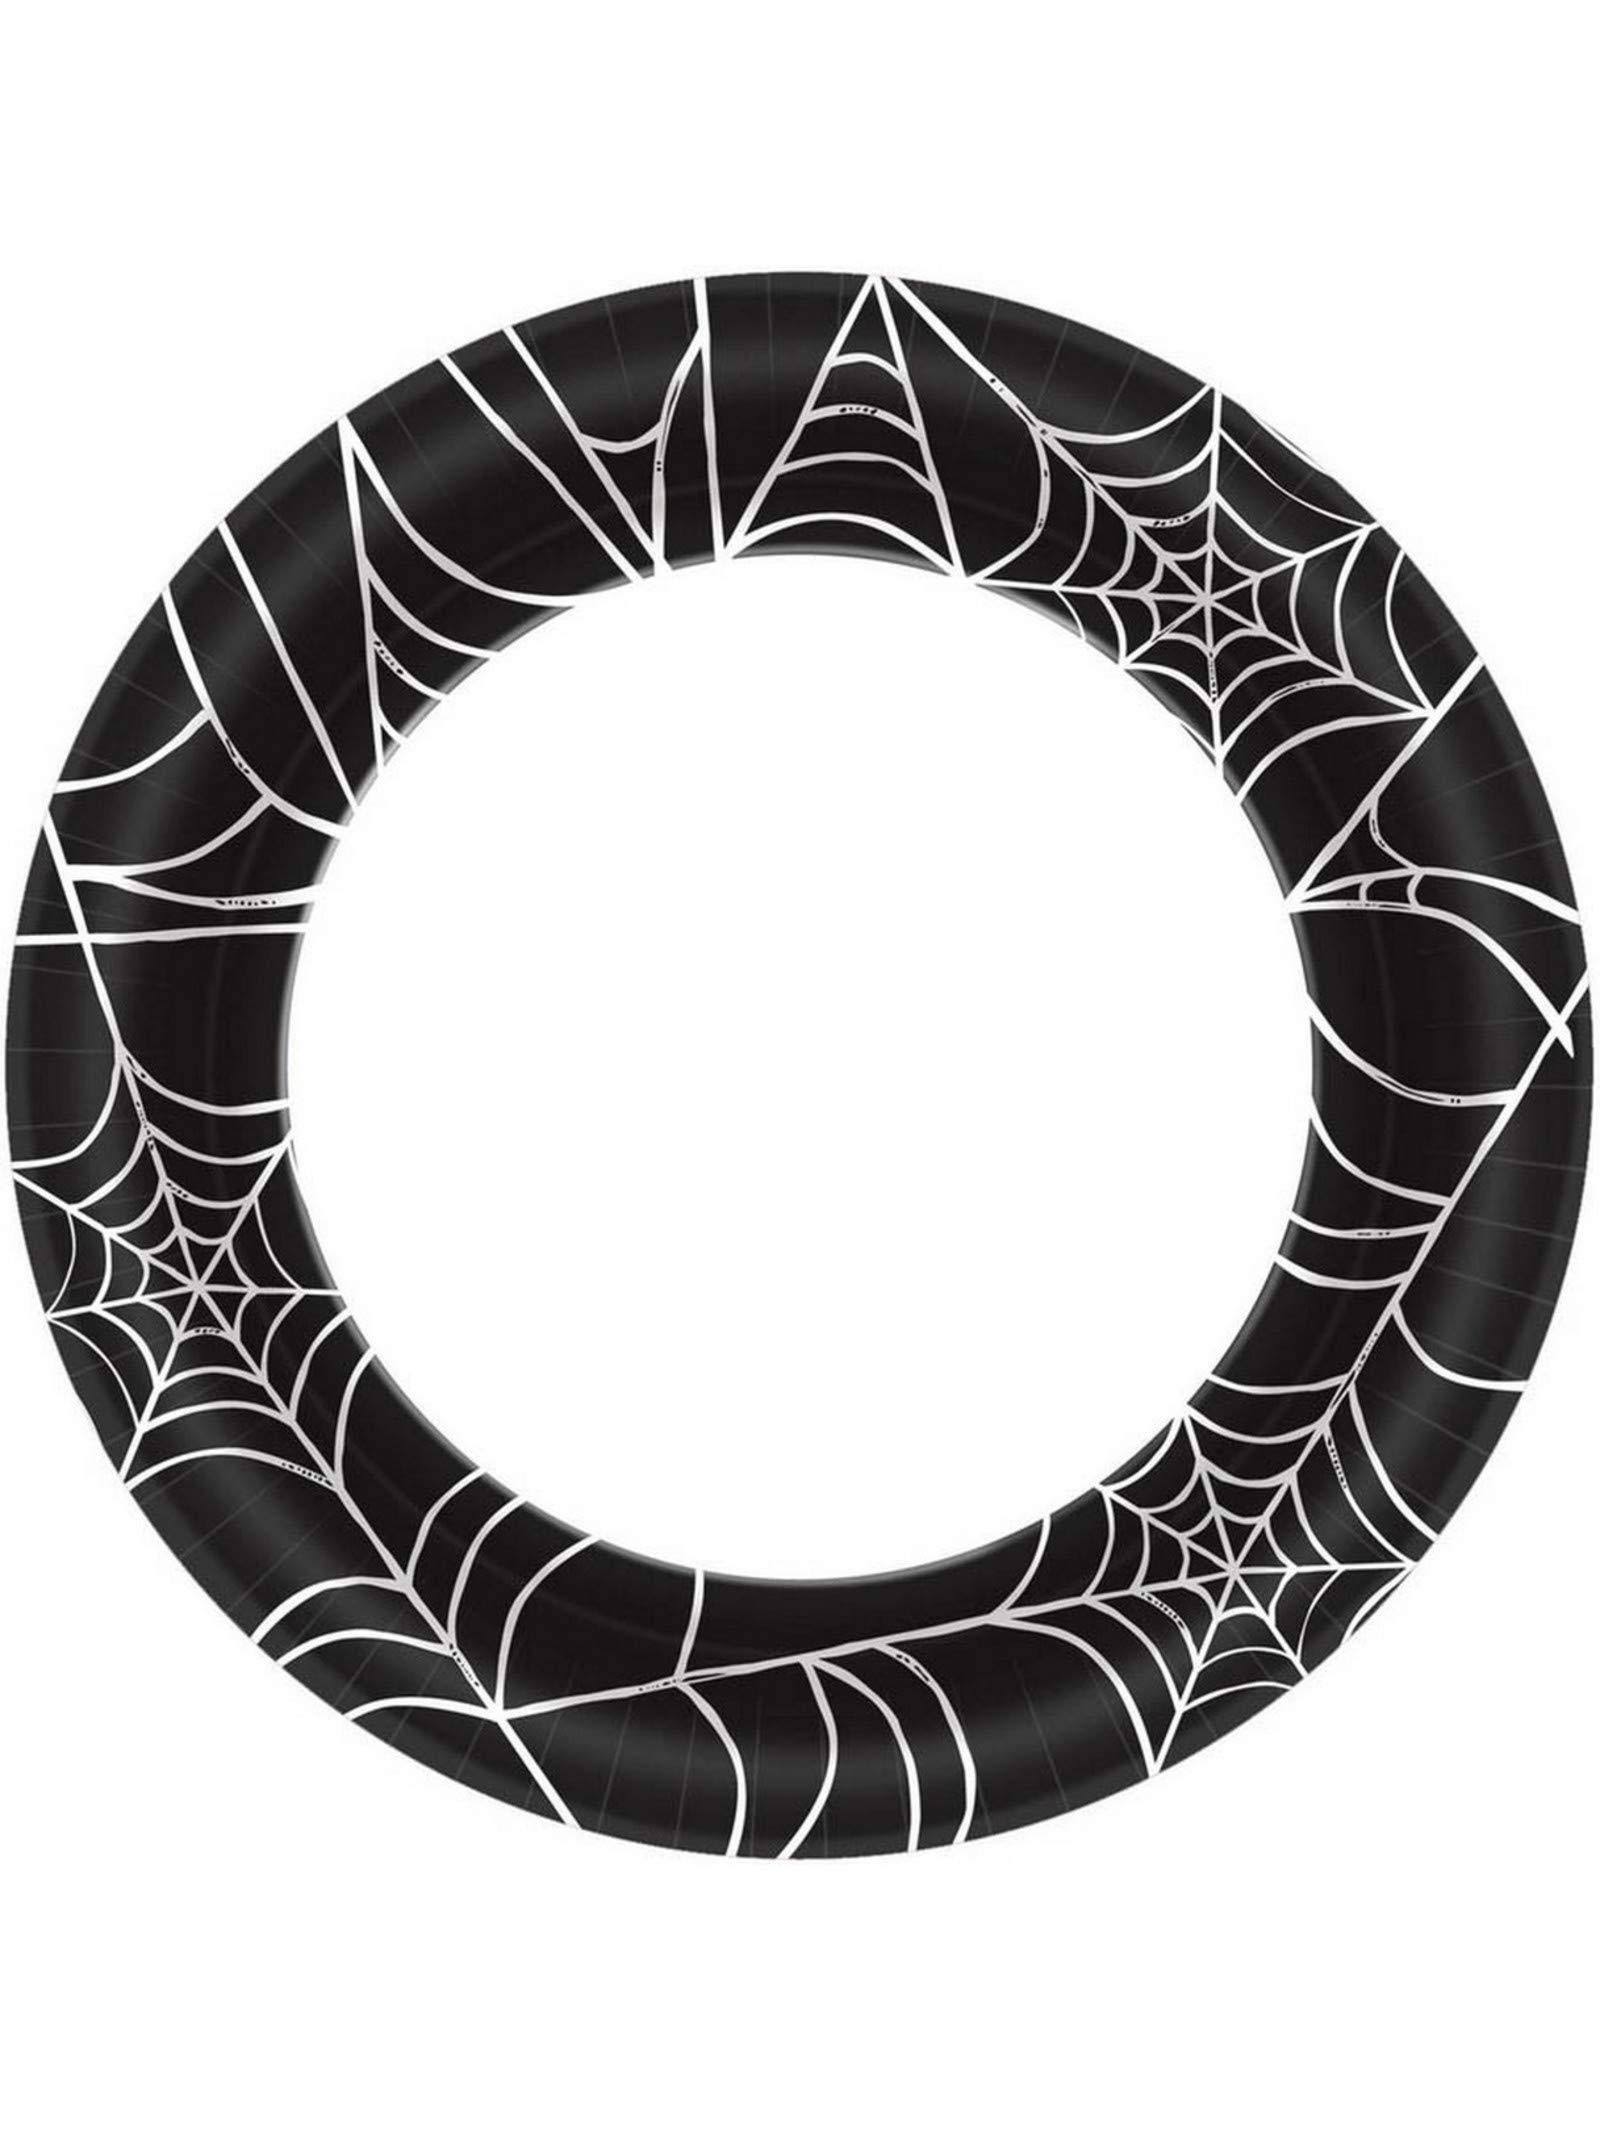 Halloween Spider Web Paper Plate - 10"